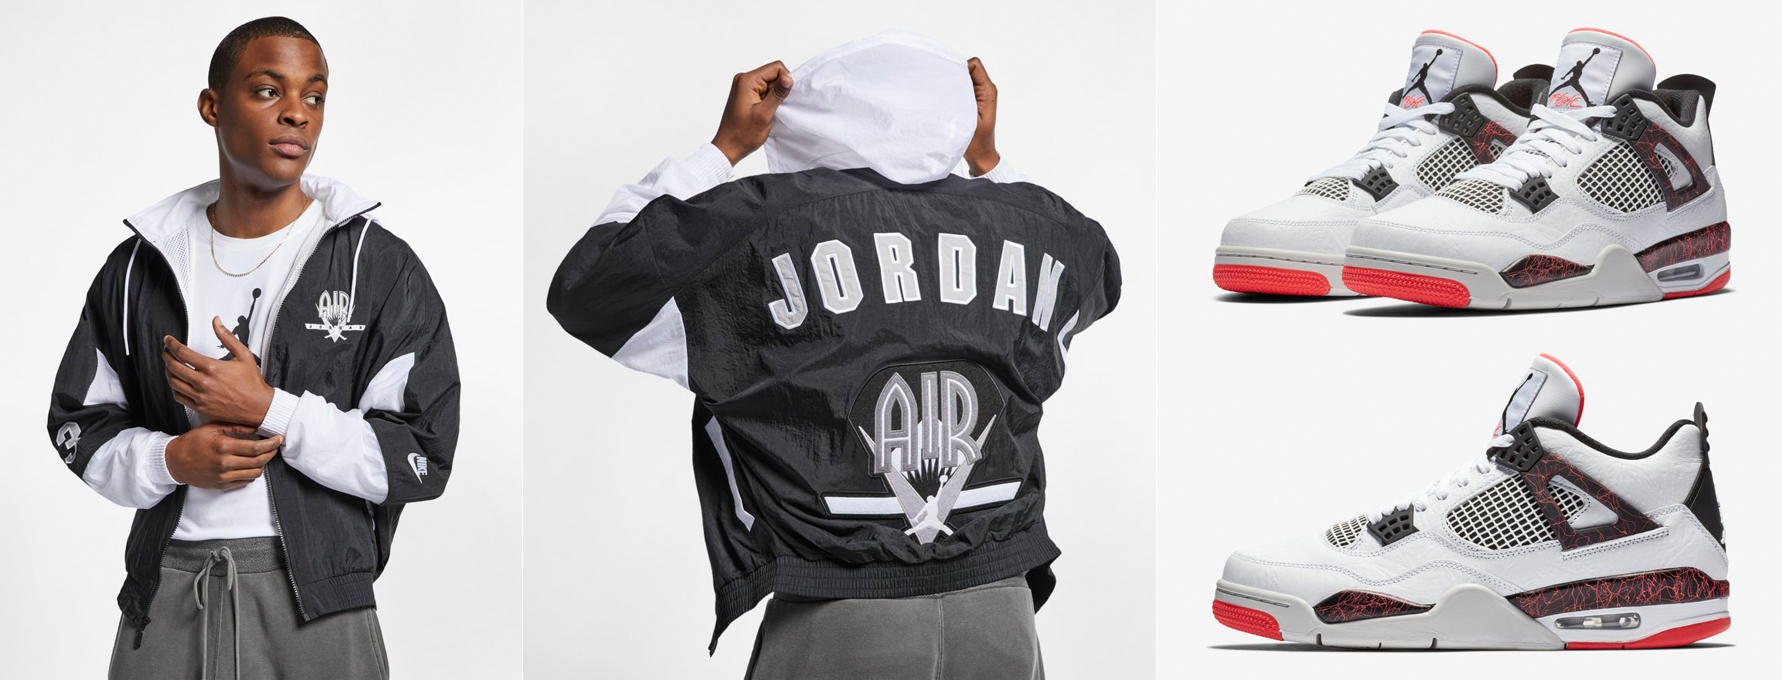 Air Jordan 4 Hot Lava Jacket Match 